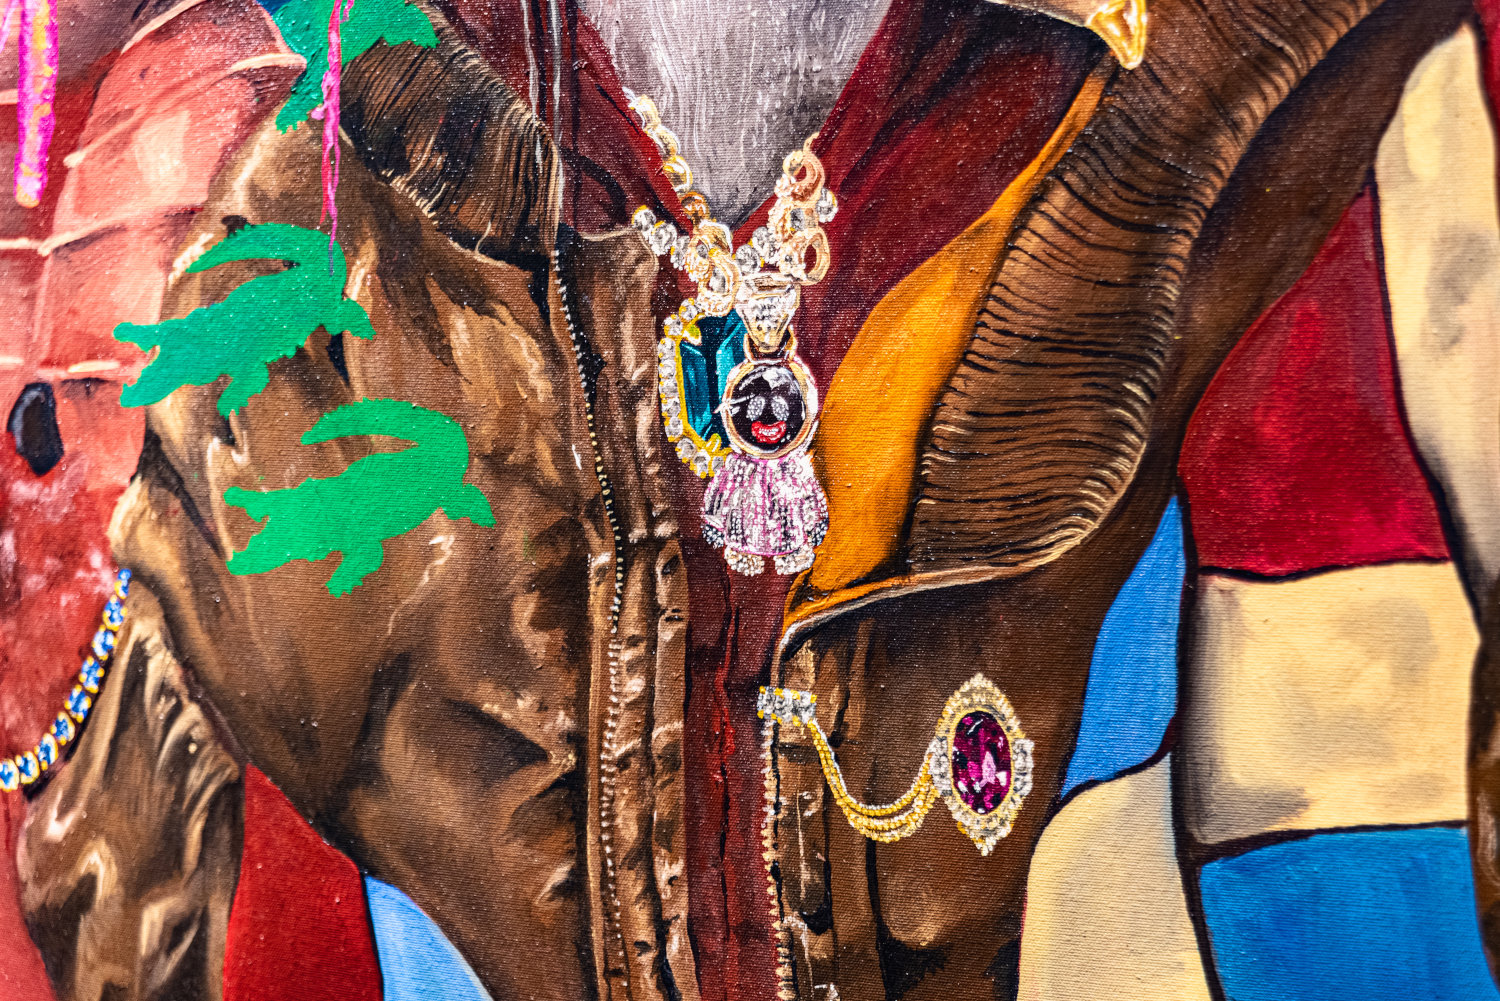 Dani Iribe painting: Detail view of jacket worn by fantasy figure